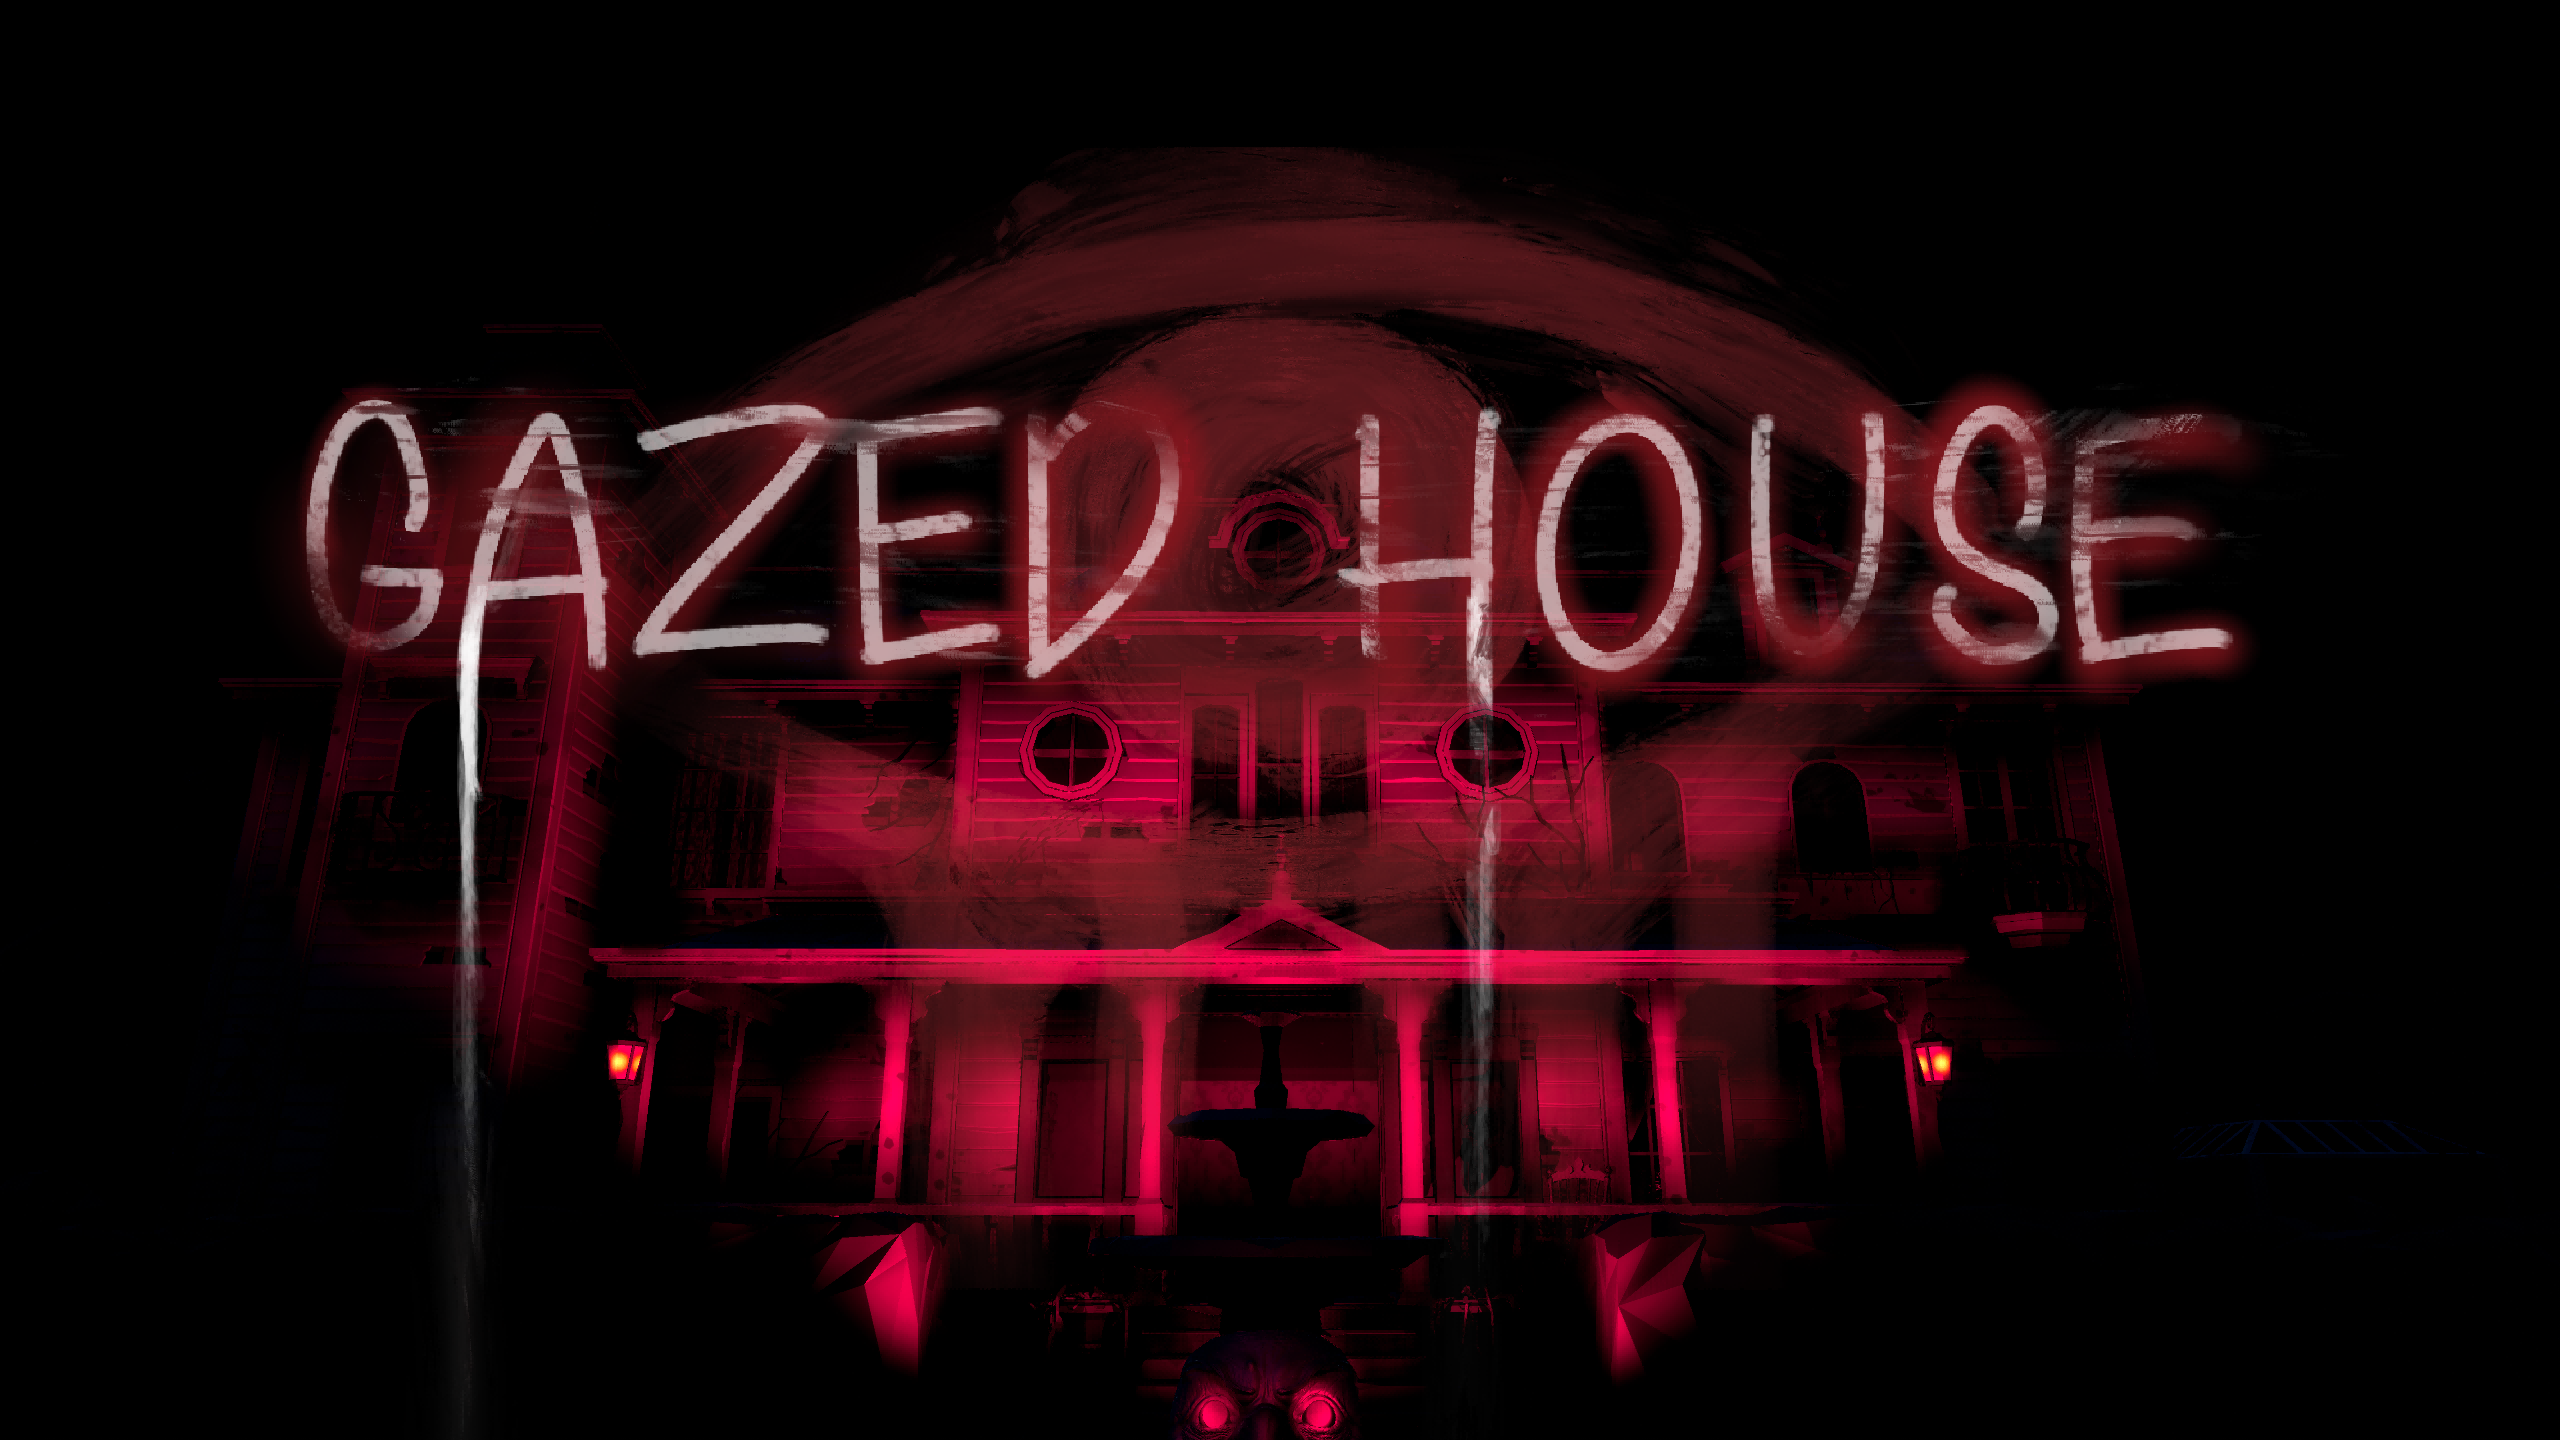 Gazed House